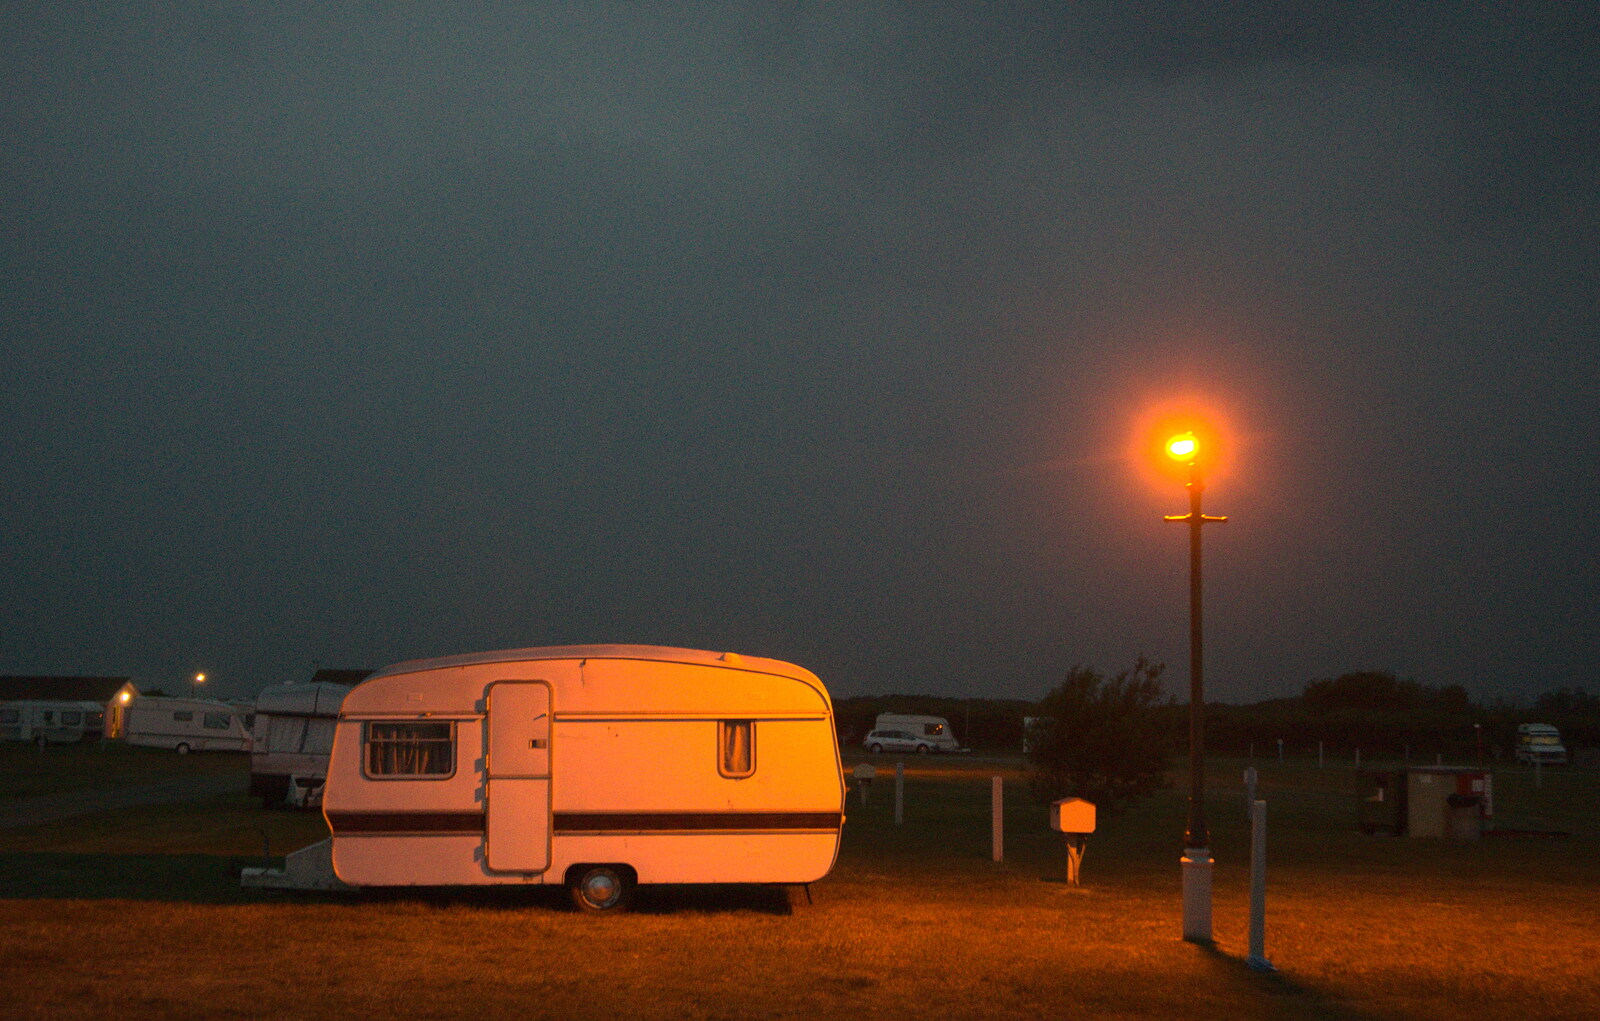 A sodium-lit caravan from A Wet Weekend of Camping, Waxham Sands, Norfolk - 13th June 2015